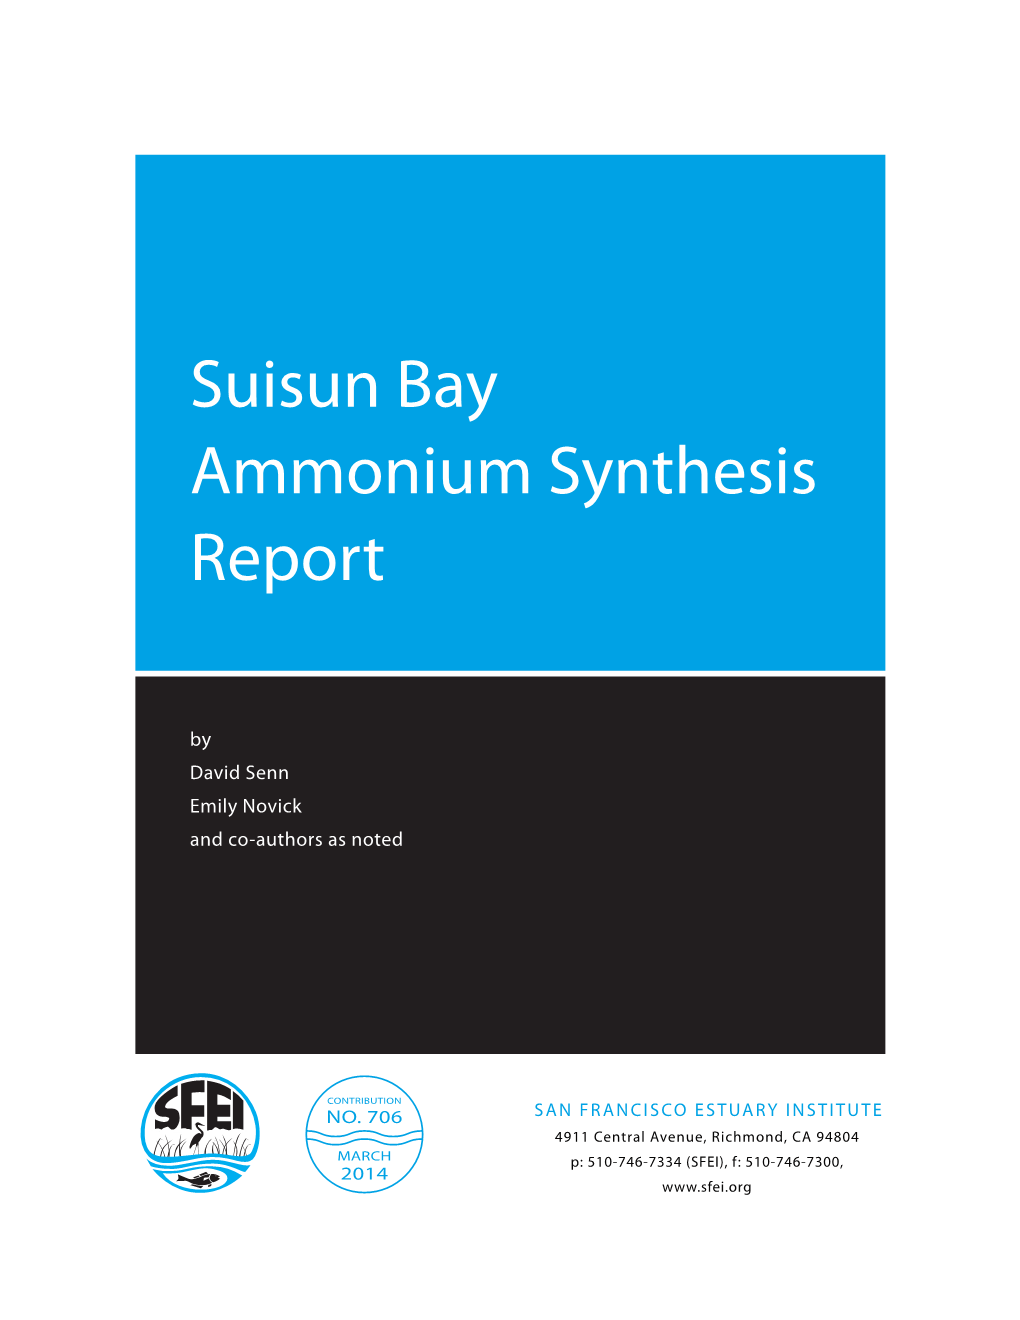 Suisun Bay Ammonium Synthesis Report